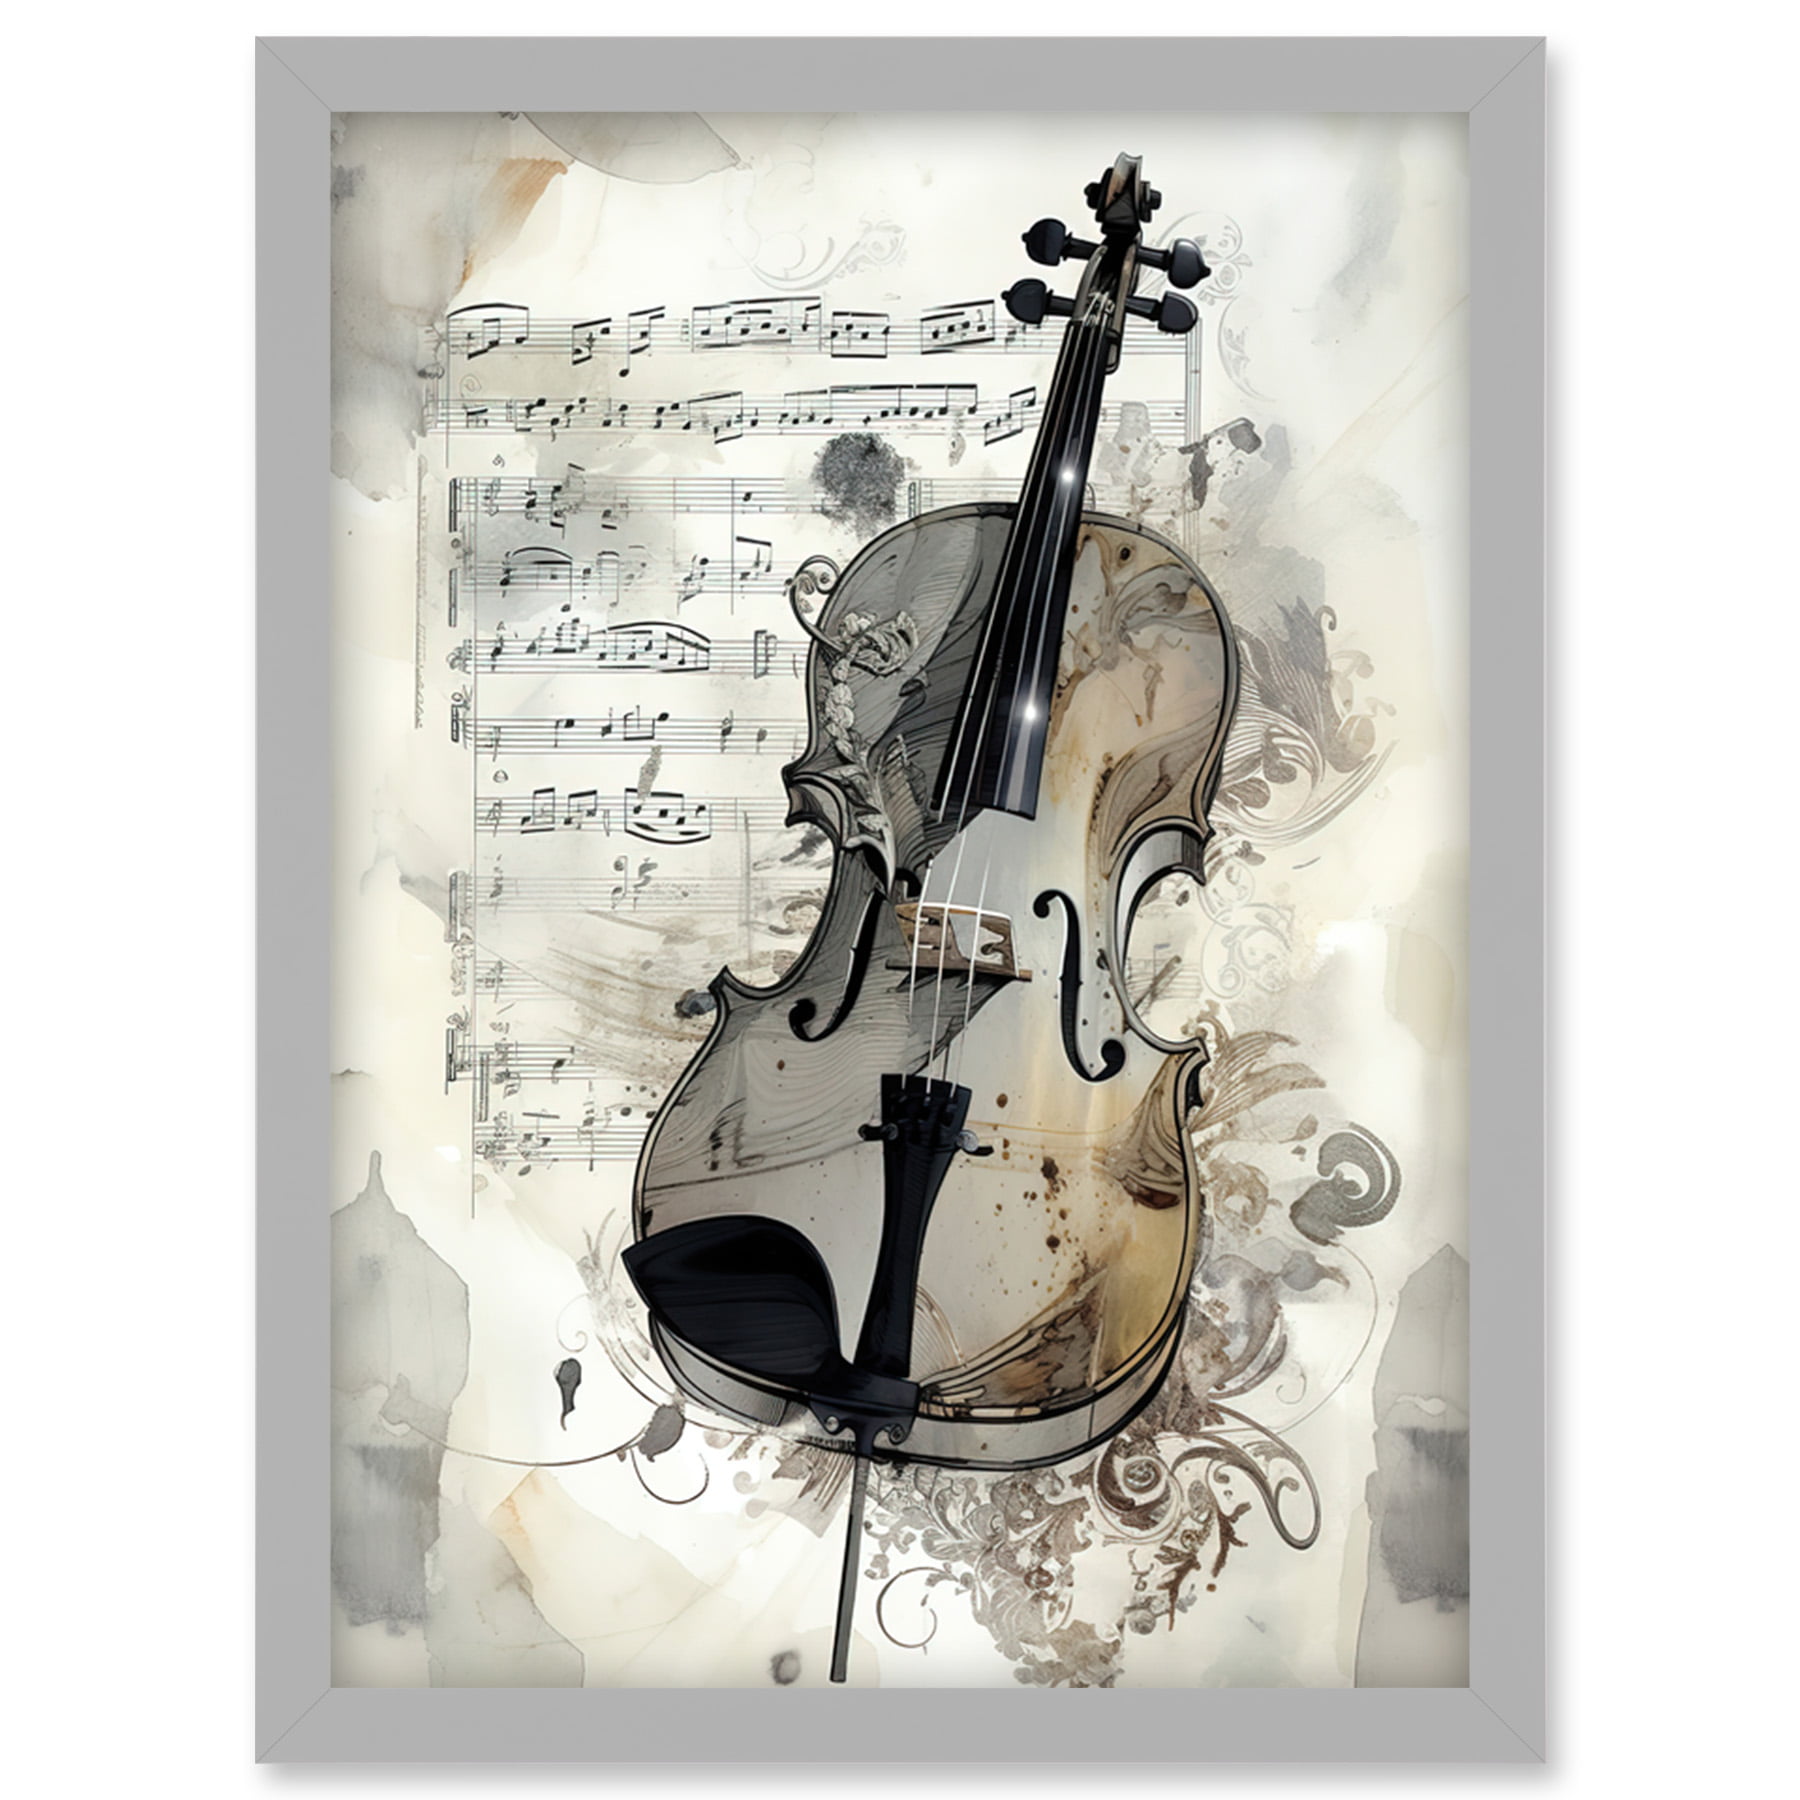 Illustration Abstract canvas painting of Violin, Music wall art prints